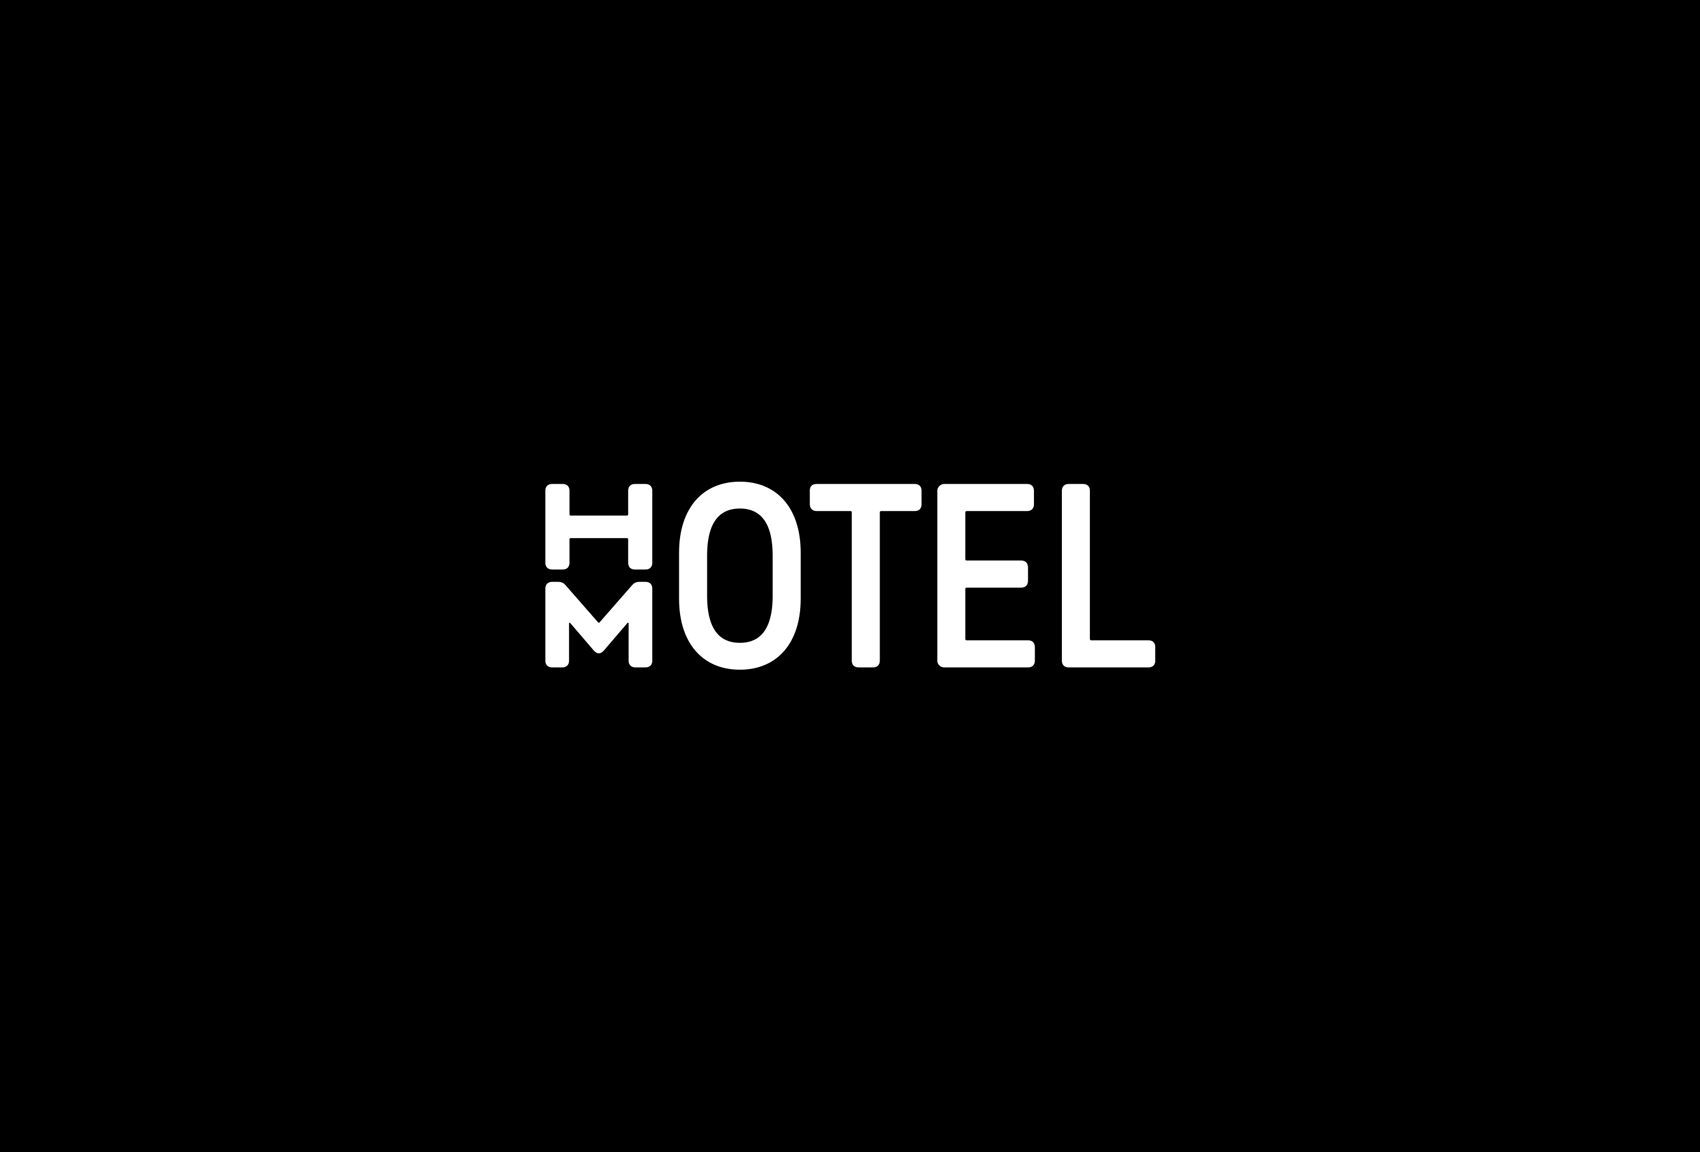 Hotel Motel – Visual Journal